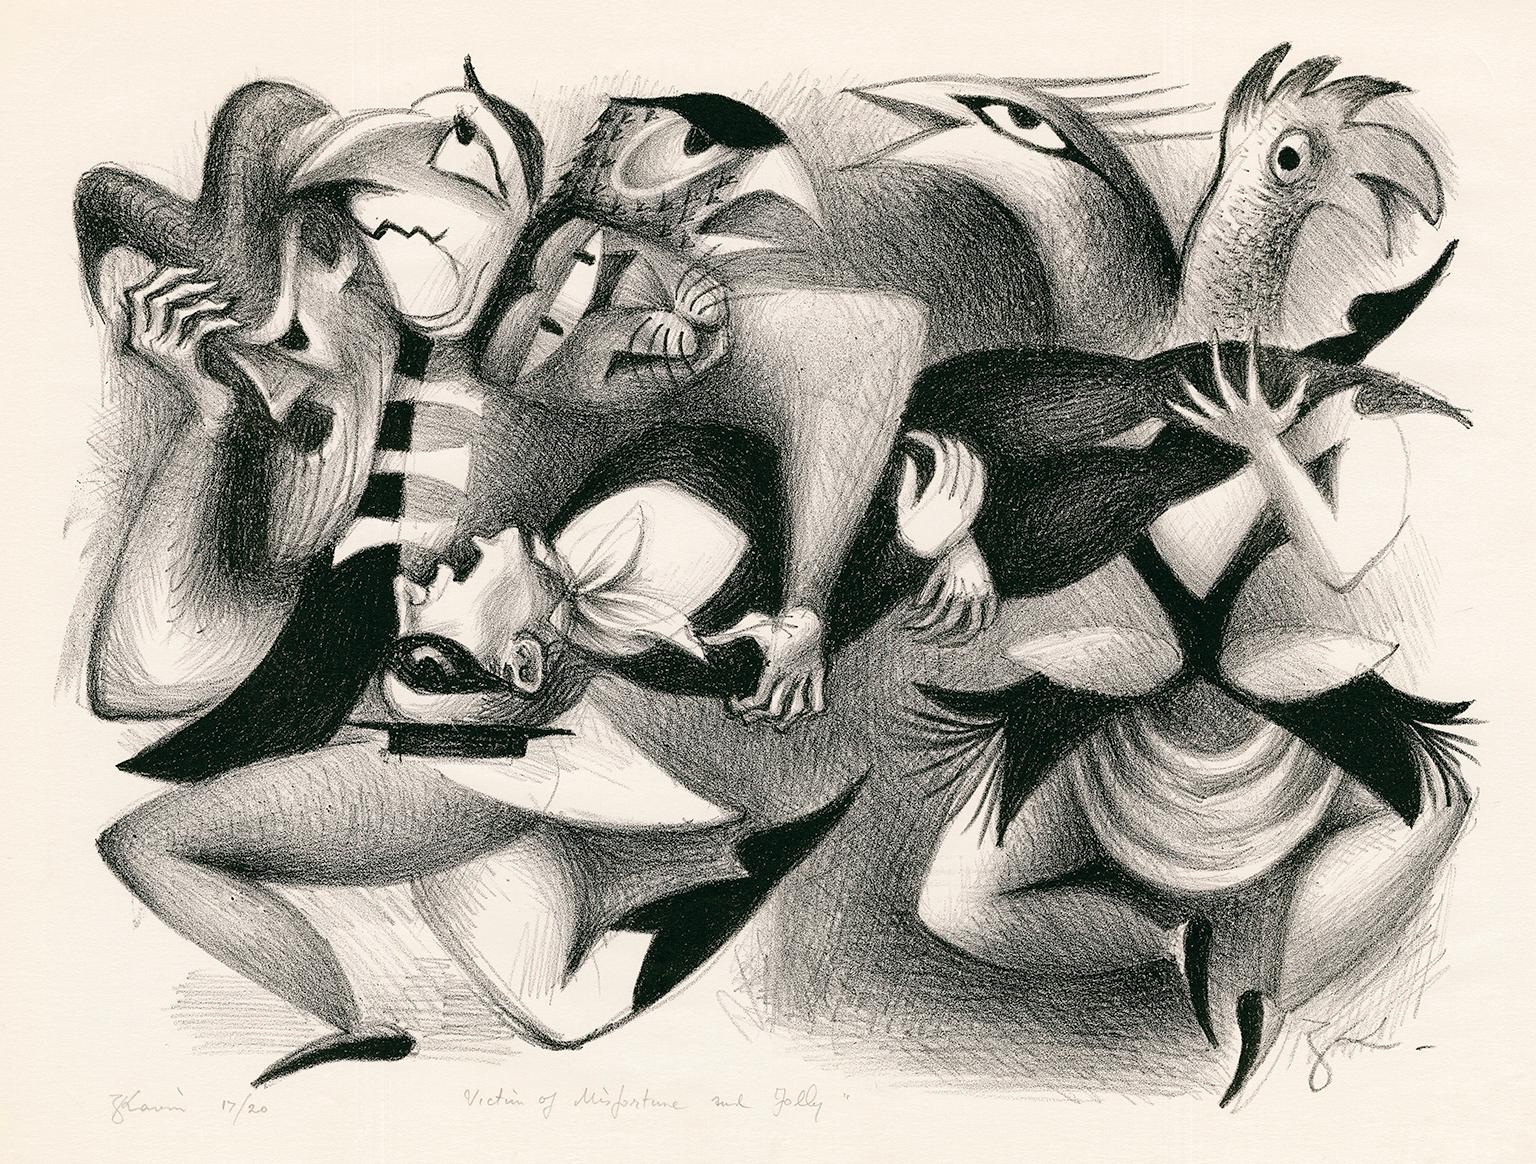 Zena Kavin Figurative Print - 'Victim of Misfortune and Folly' — 1930s Surrealist Fantasy